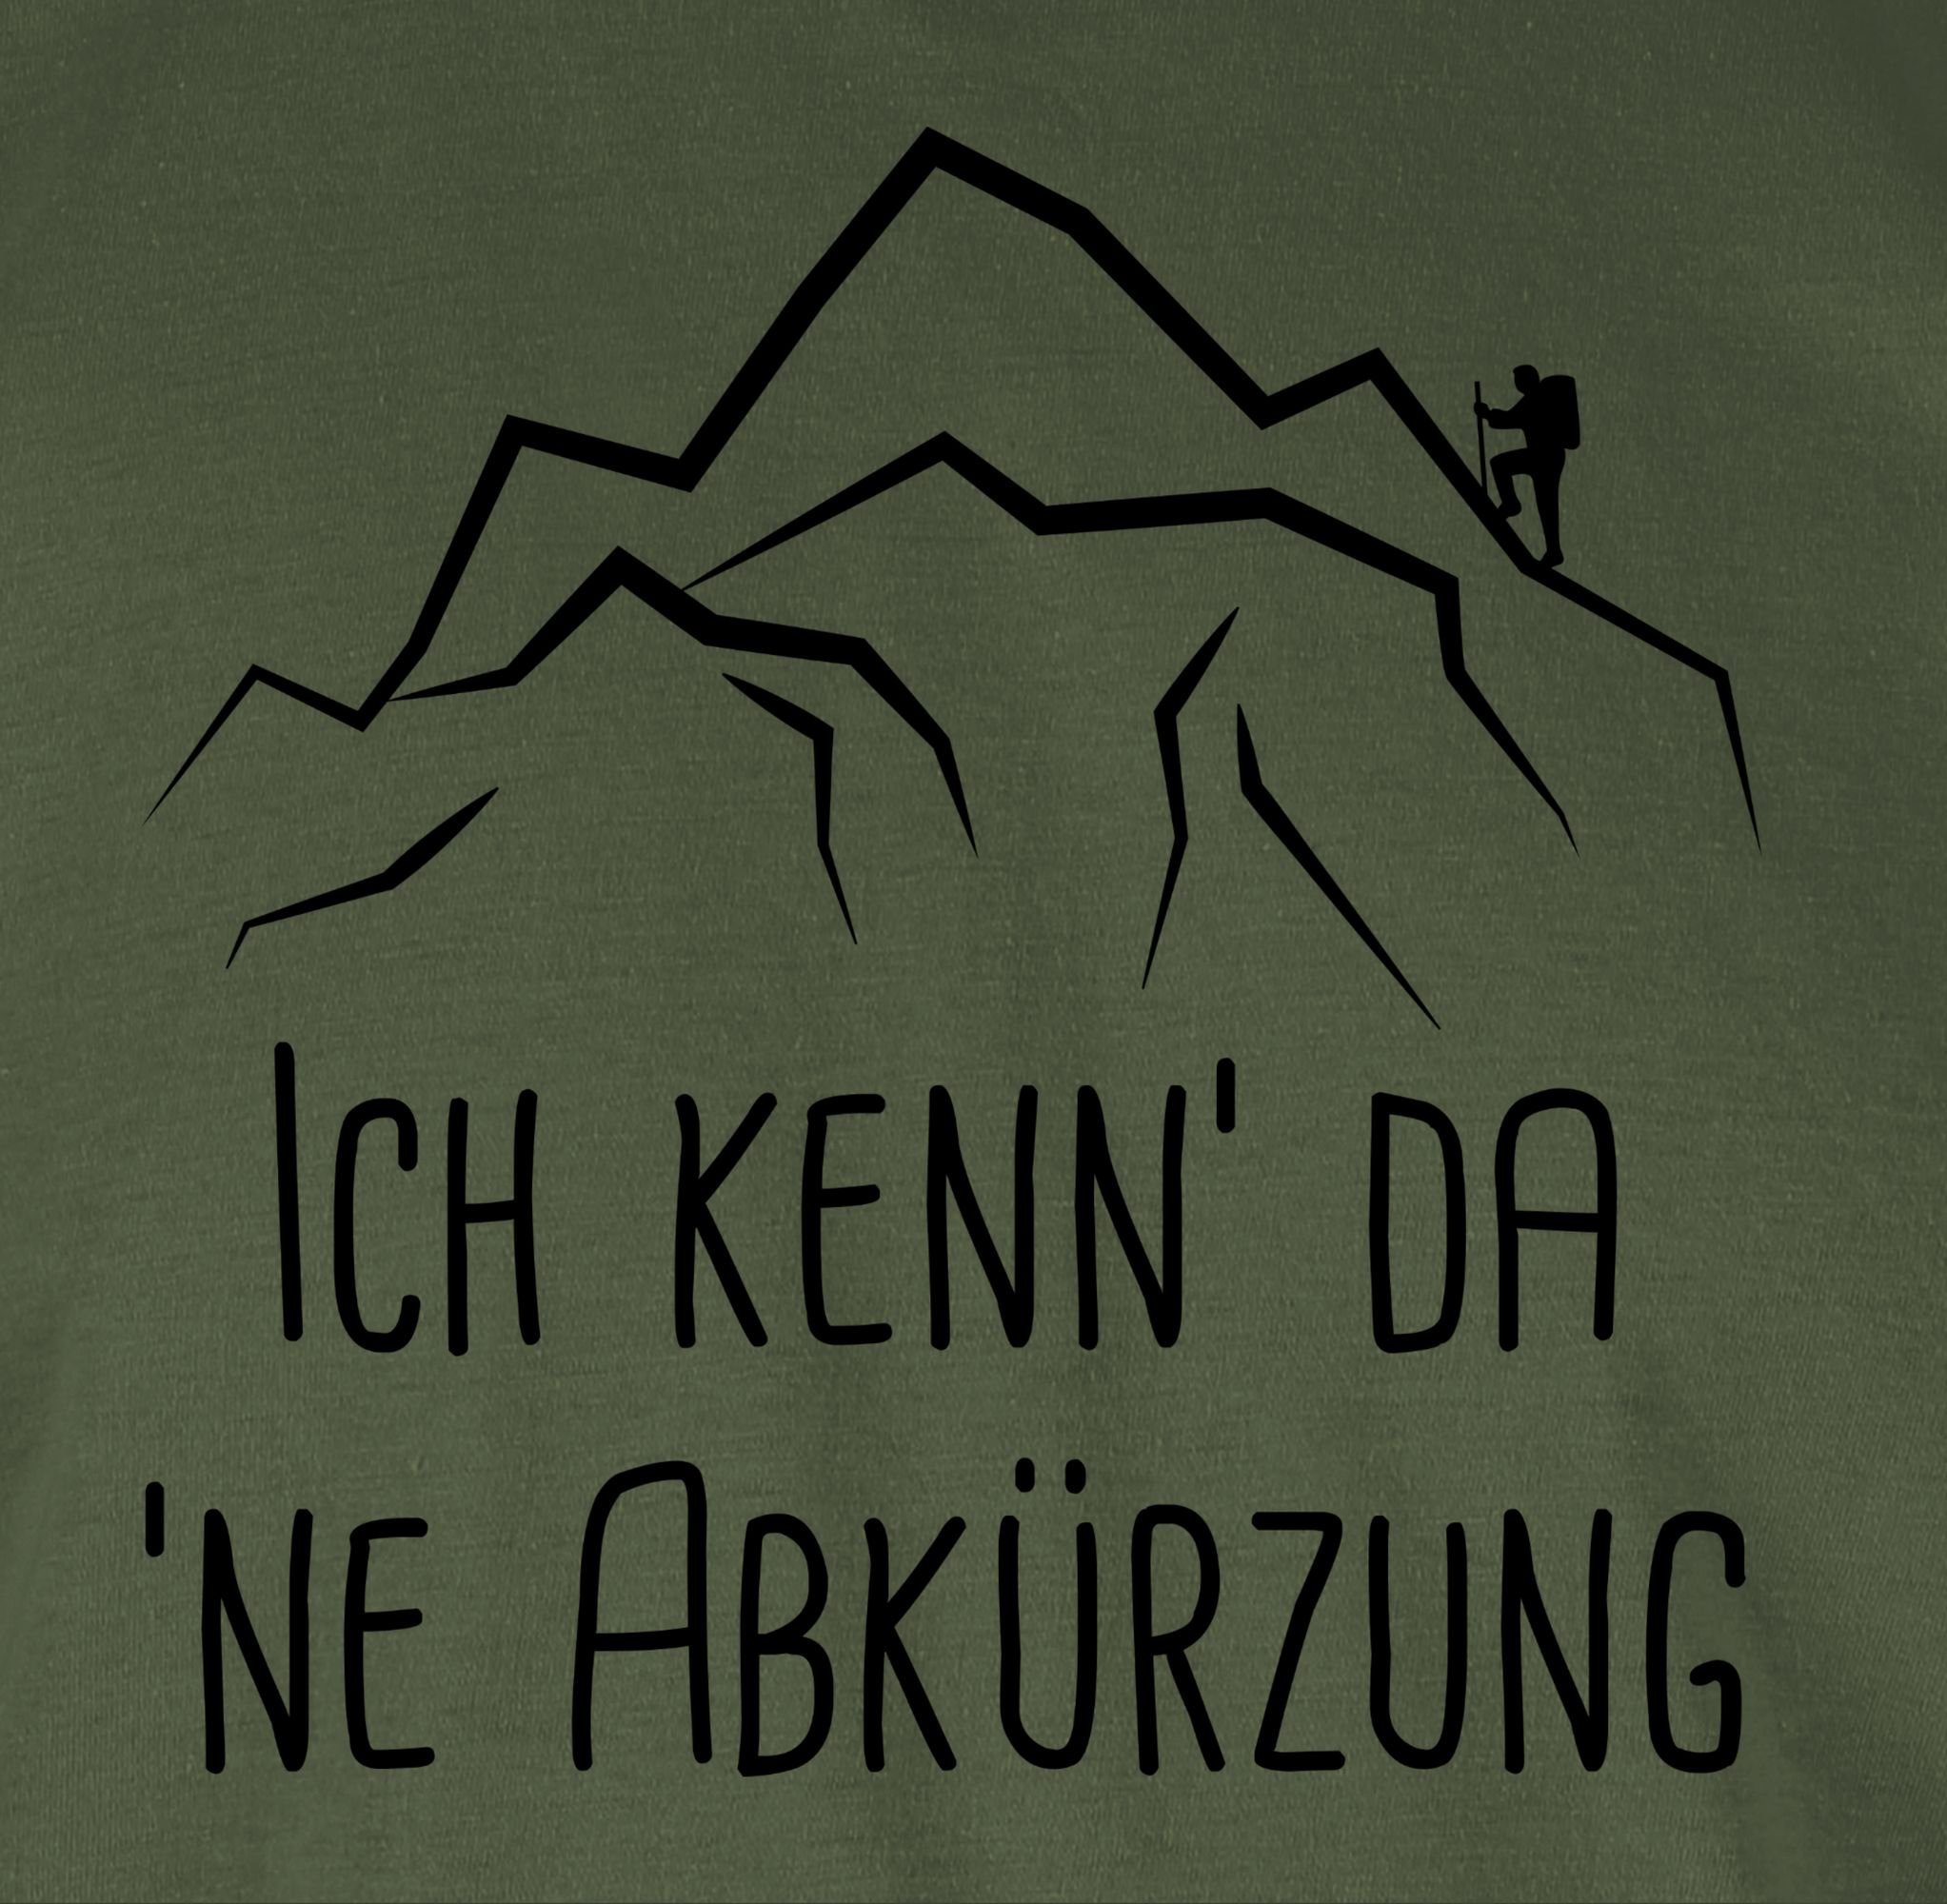 Shirtracer T-Shirt Ich schwarz Hobby da - Outfit kenn' Grün Army 03 'ne Abkürzung